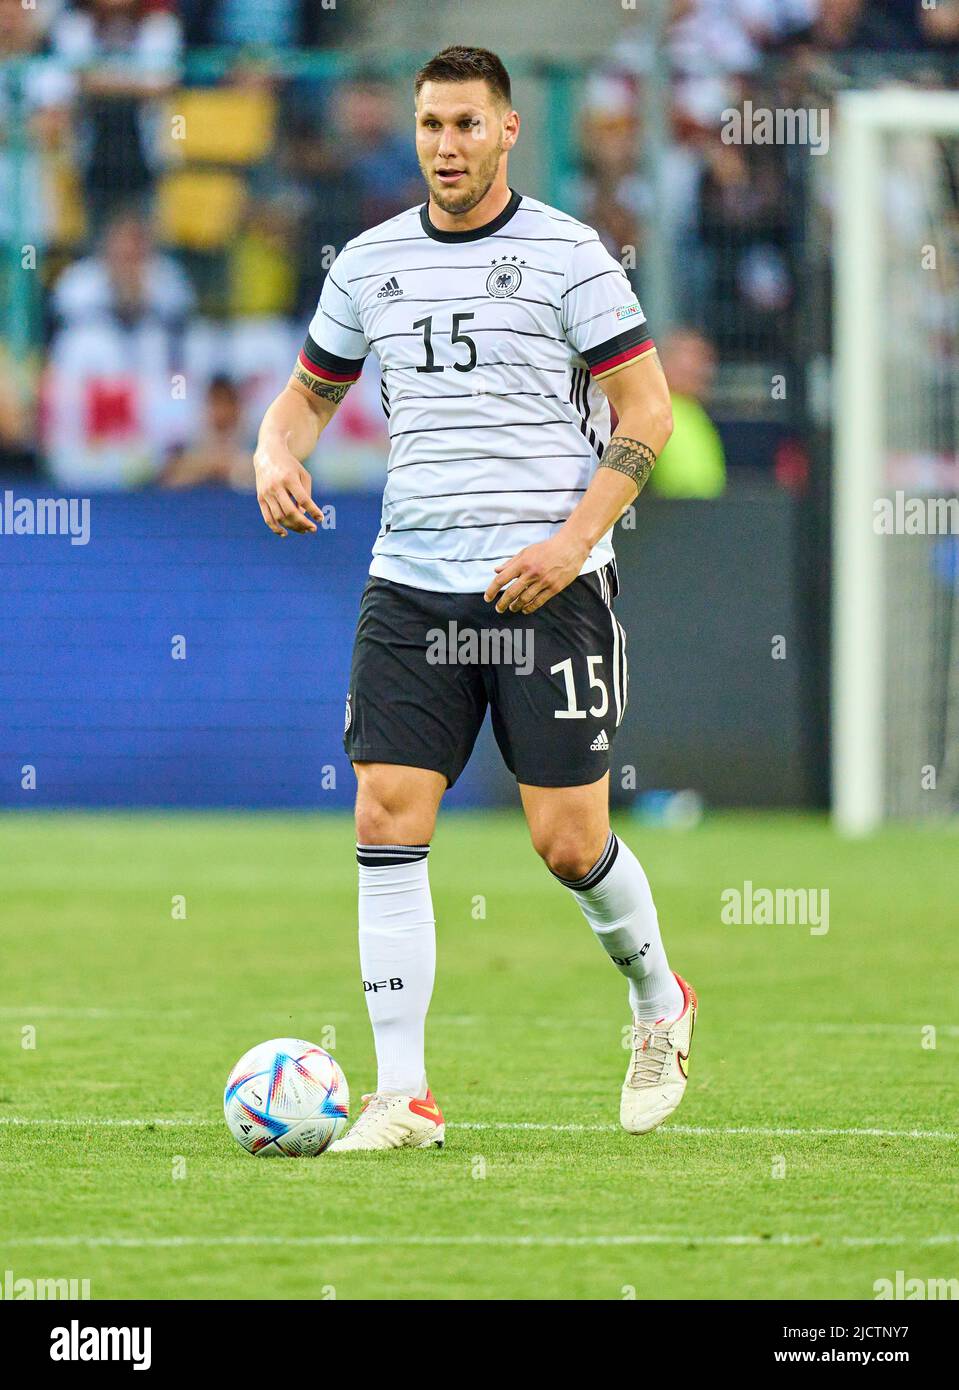 Niklas Süle, DFB 15 nella UEFA Nations League 2022 partita GERMANIA - ITALIA 5-2 nella stagione 2022/2023 giugno 14, 2022 a Mönchengladbach, Germania. © Peter Schatz / Alamy Live News Foto Stock